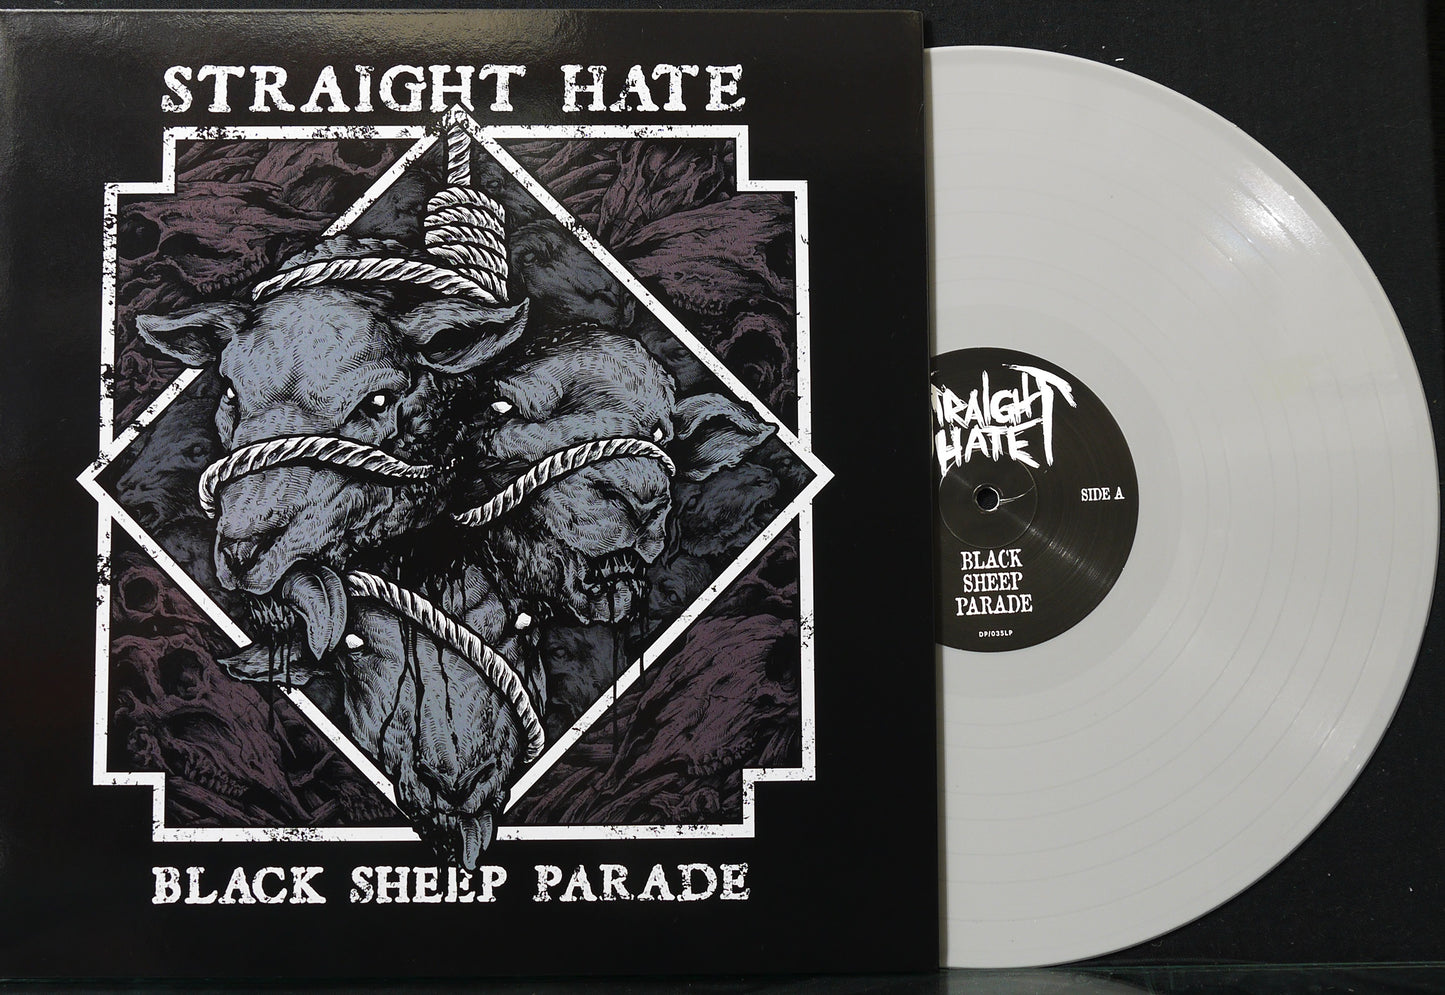 STRAIGHT HATE - Black Sheep Parade 12"